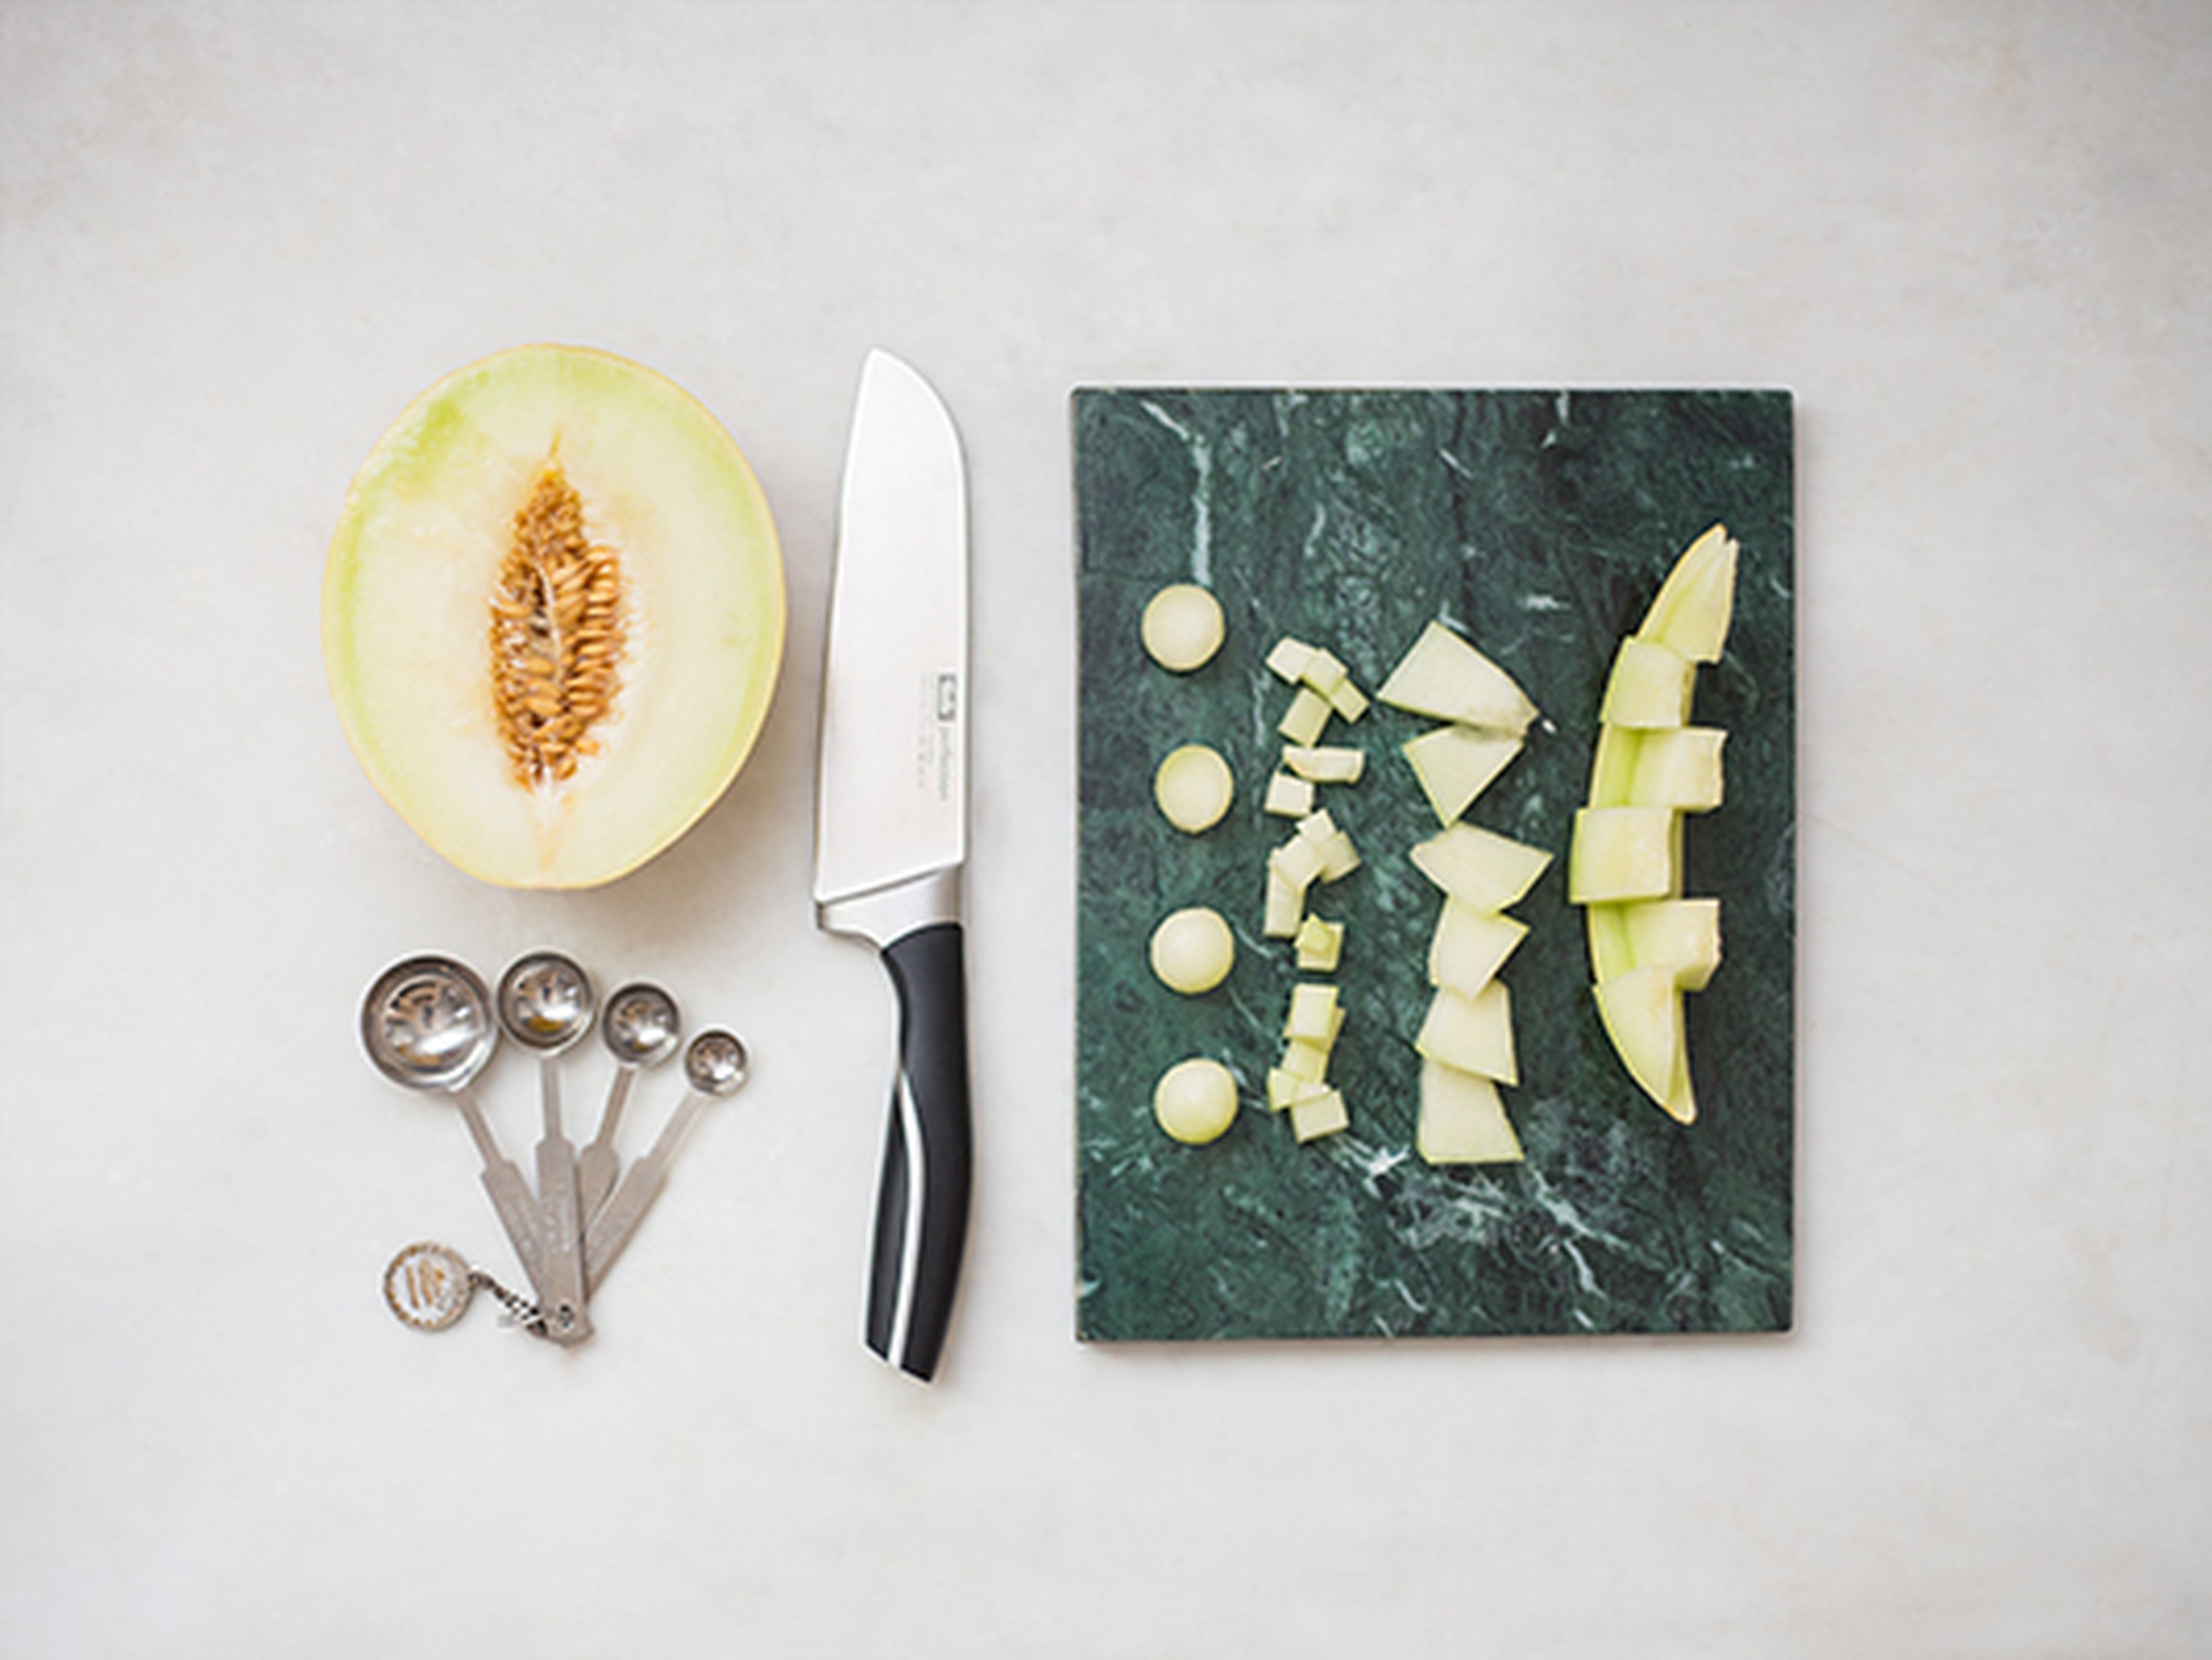 How to prepare a honeydew melon